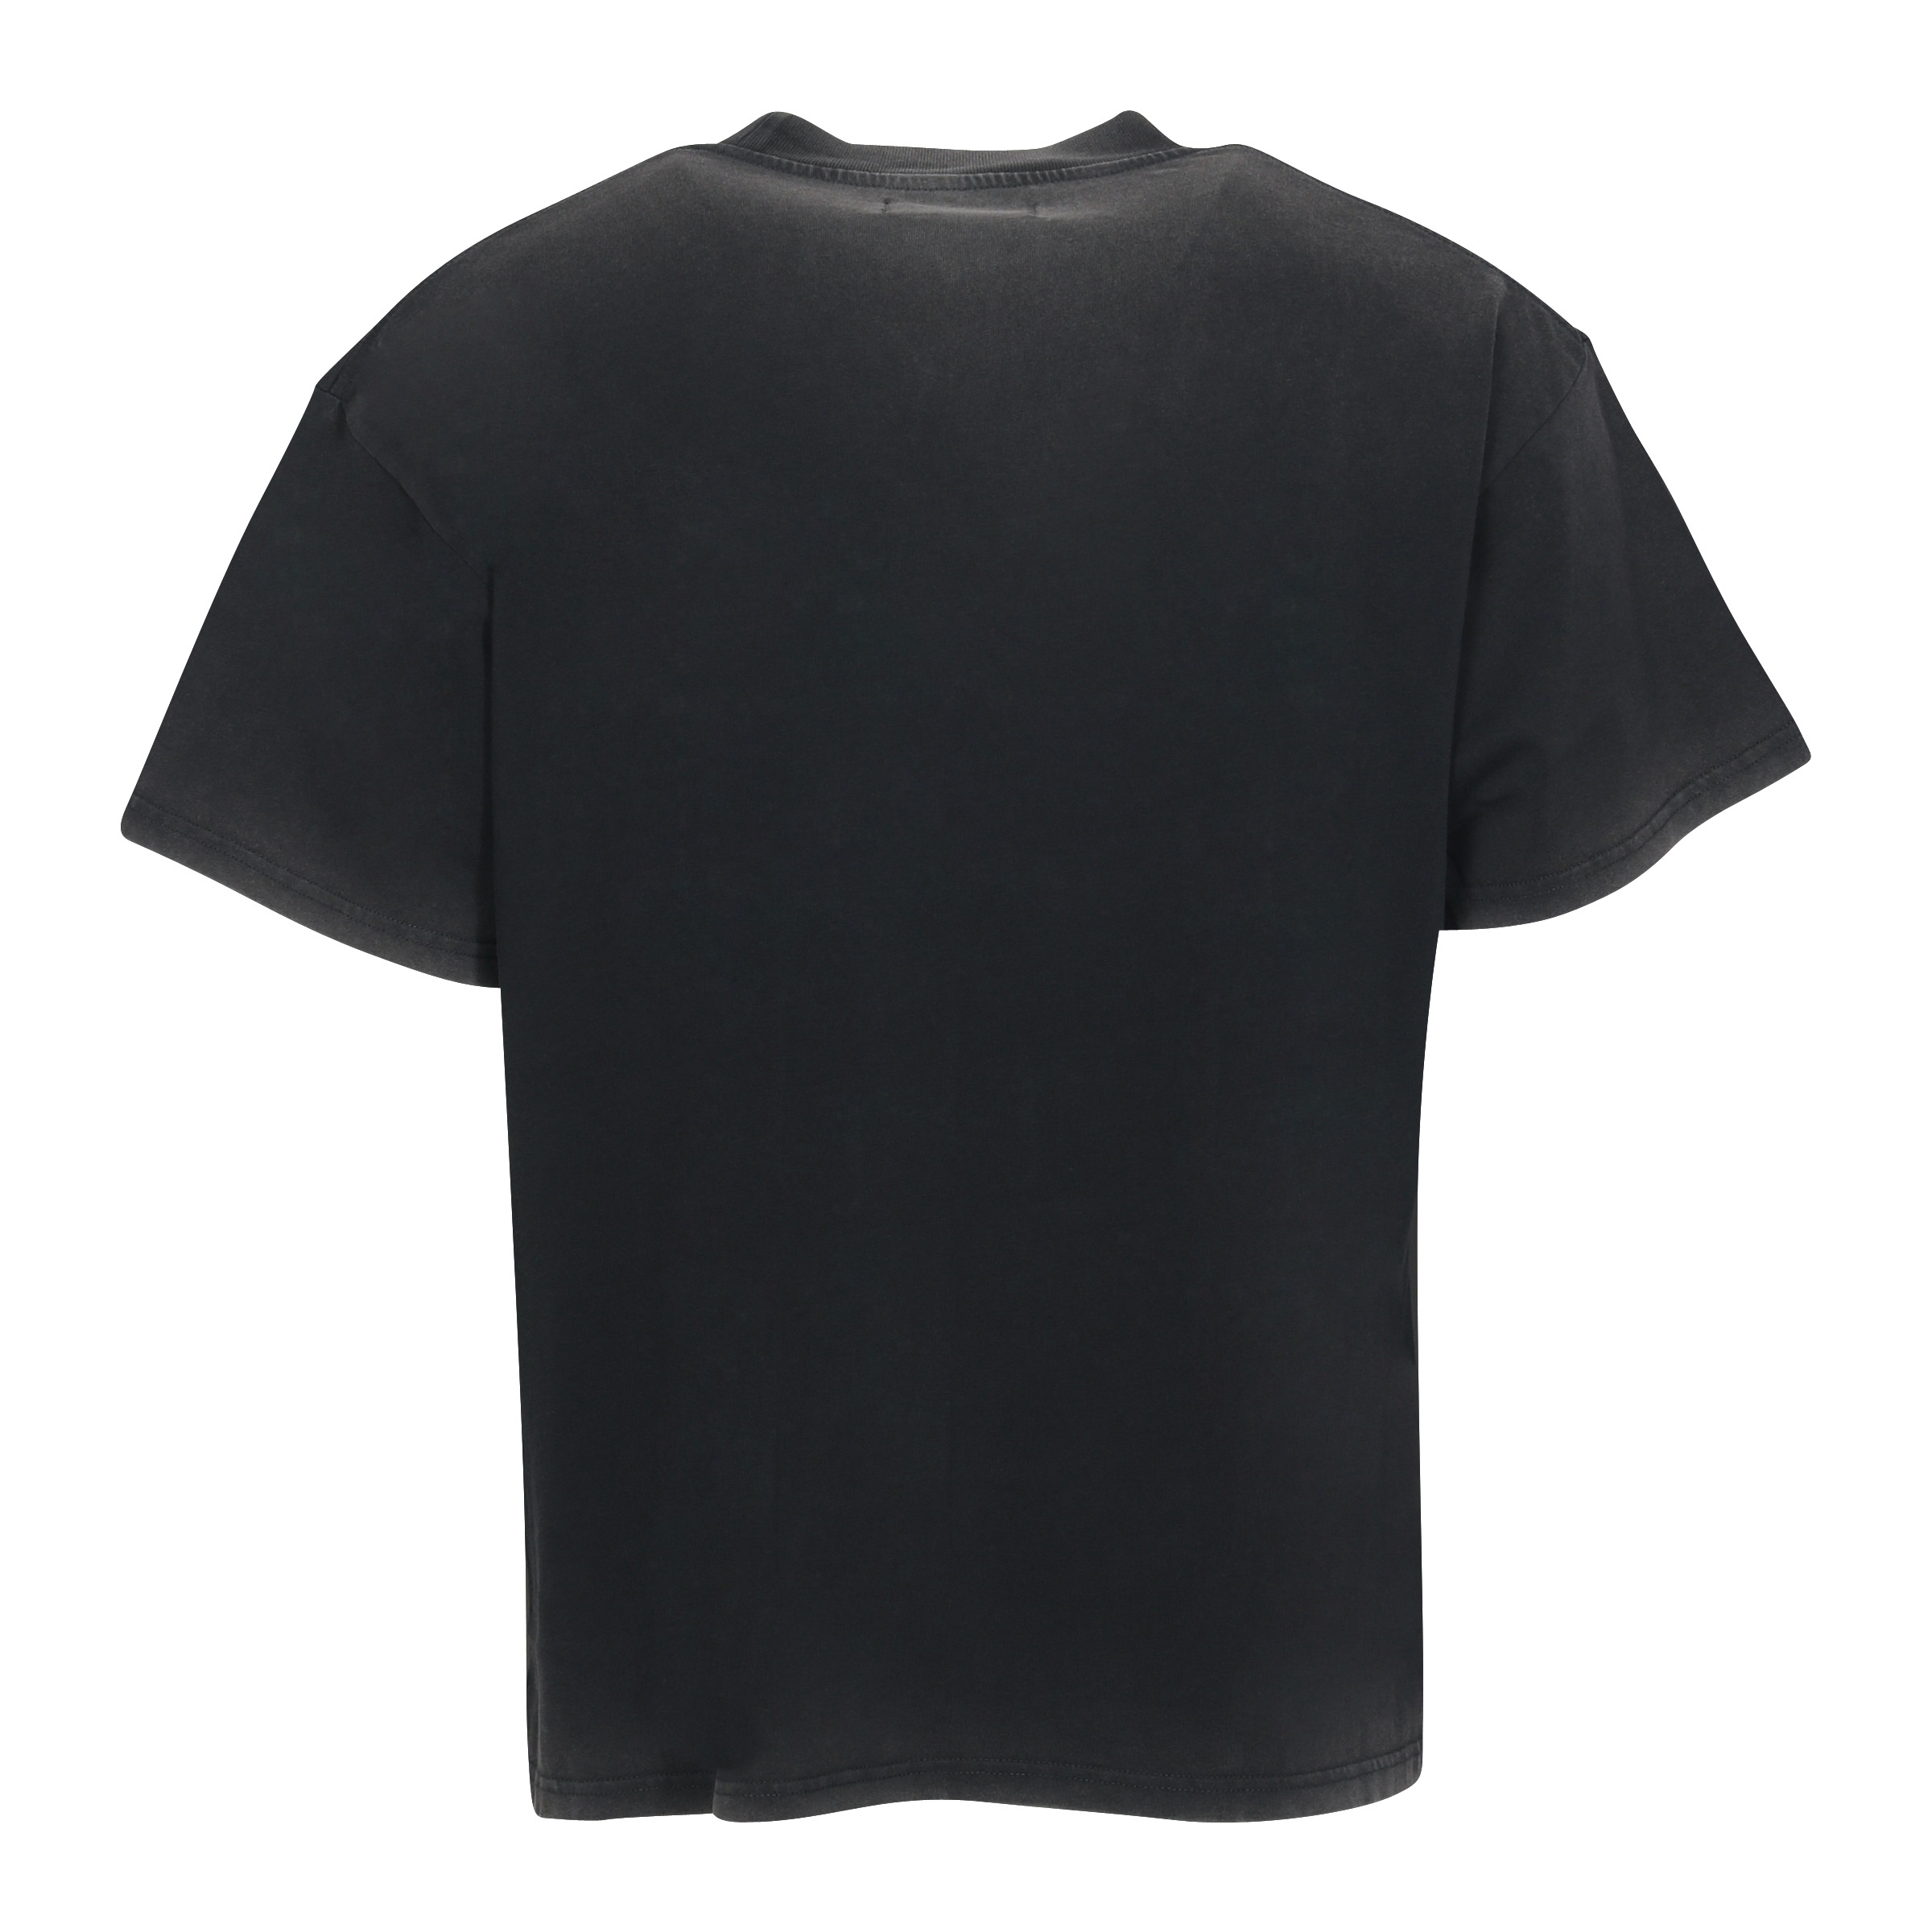 Represent The Spirit Untamed T-Shirt in Vintage Black